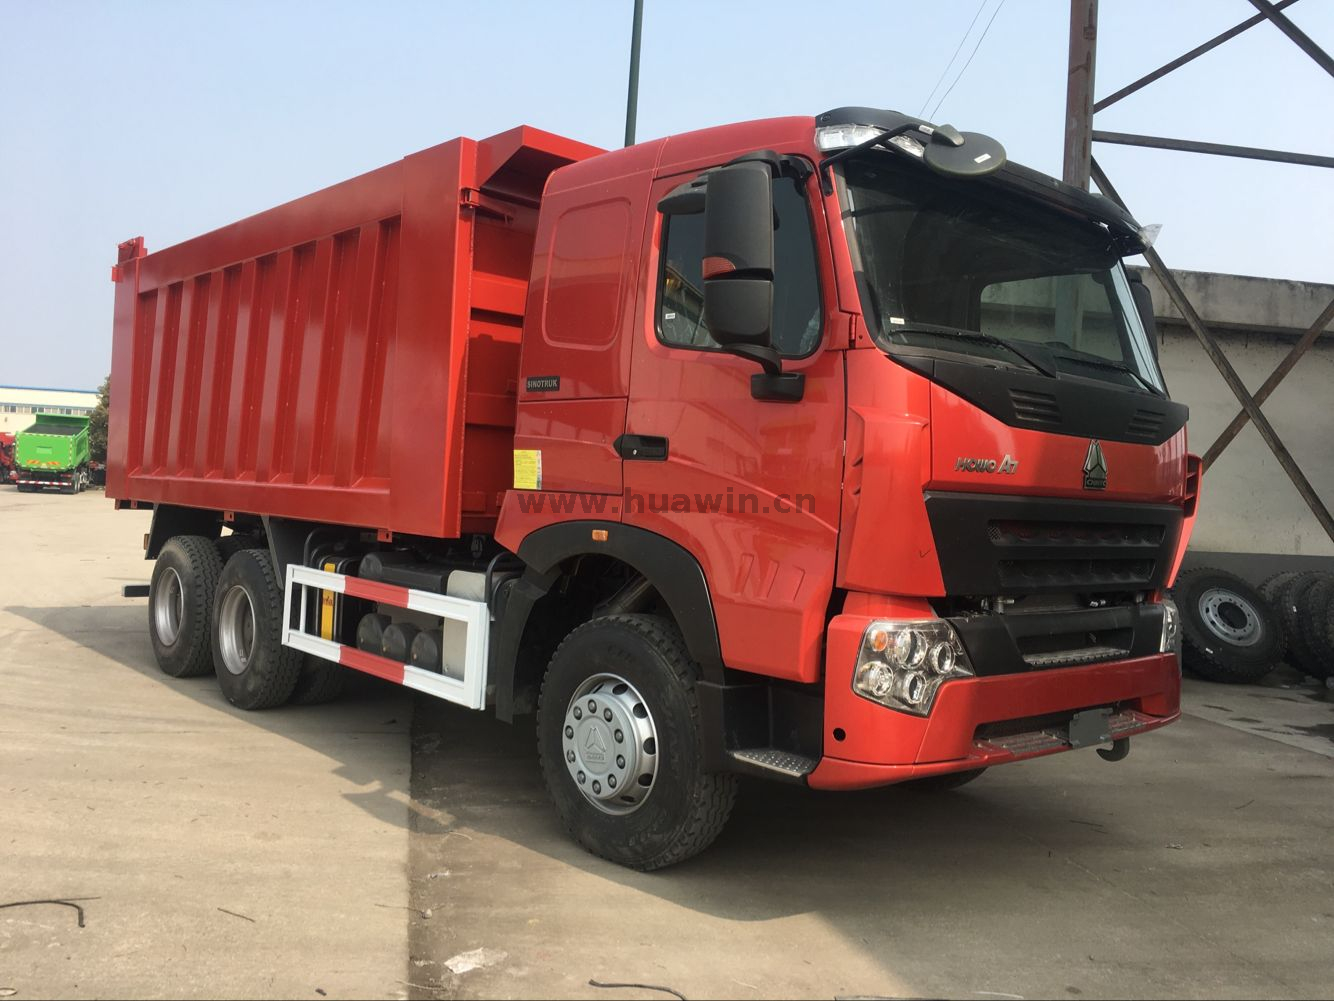 SINOTRUK A7 6X4 10 Wheels 30T Dump Truck